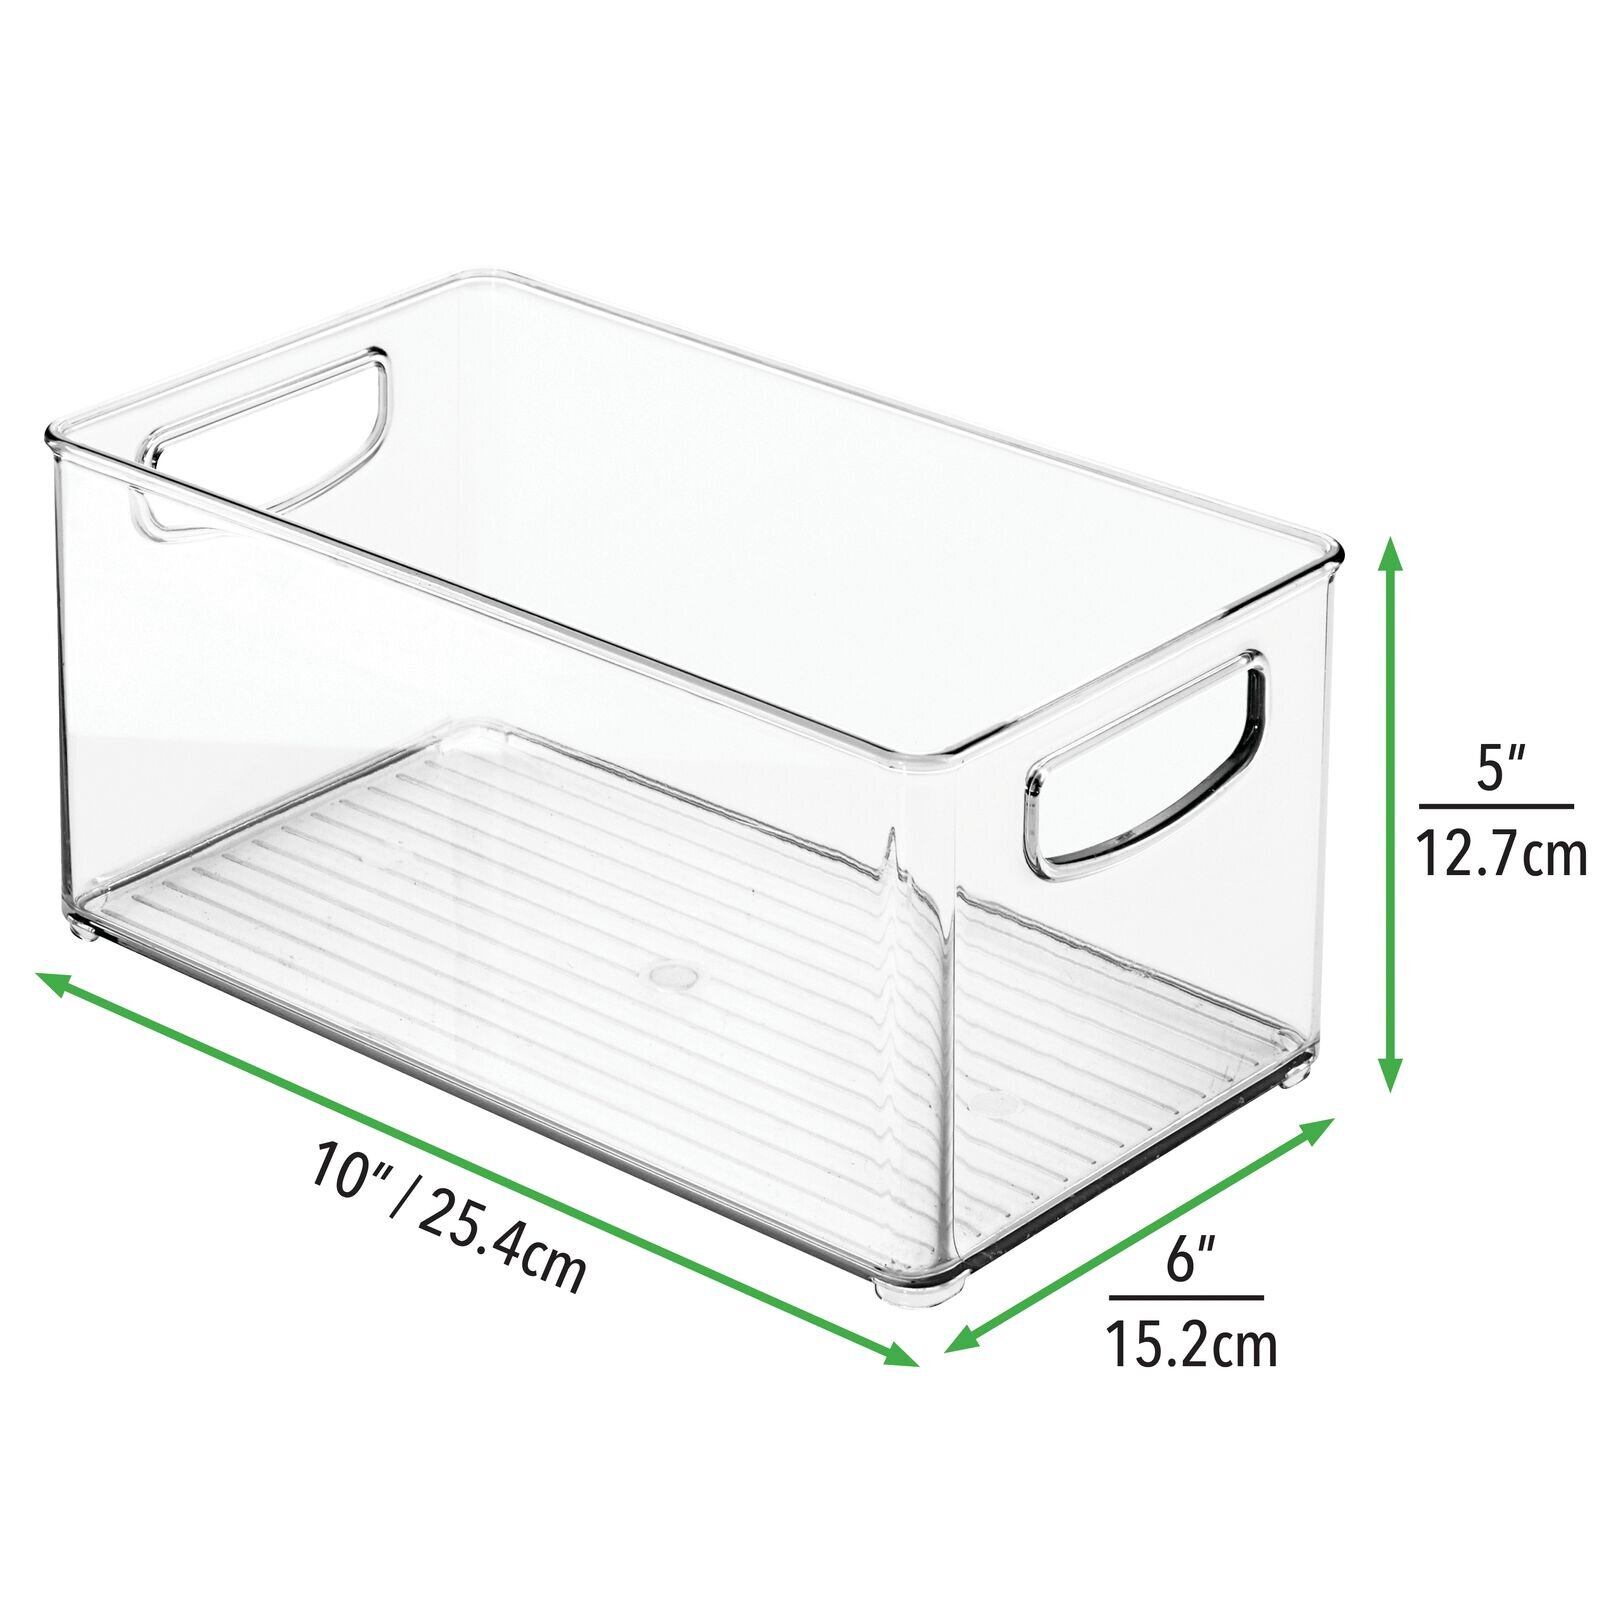 Mdesign Slim Plastic Bathroom Storage Container Bin, 5 Wide, 4